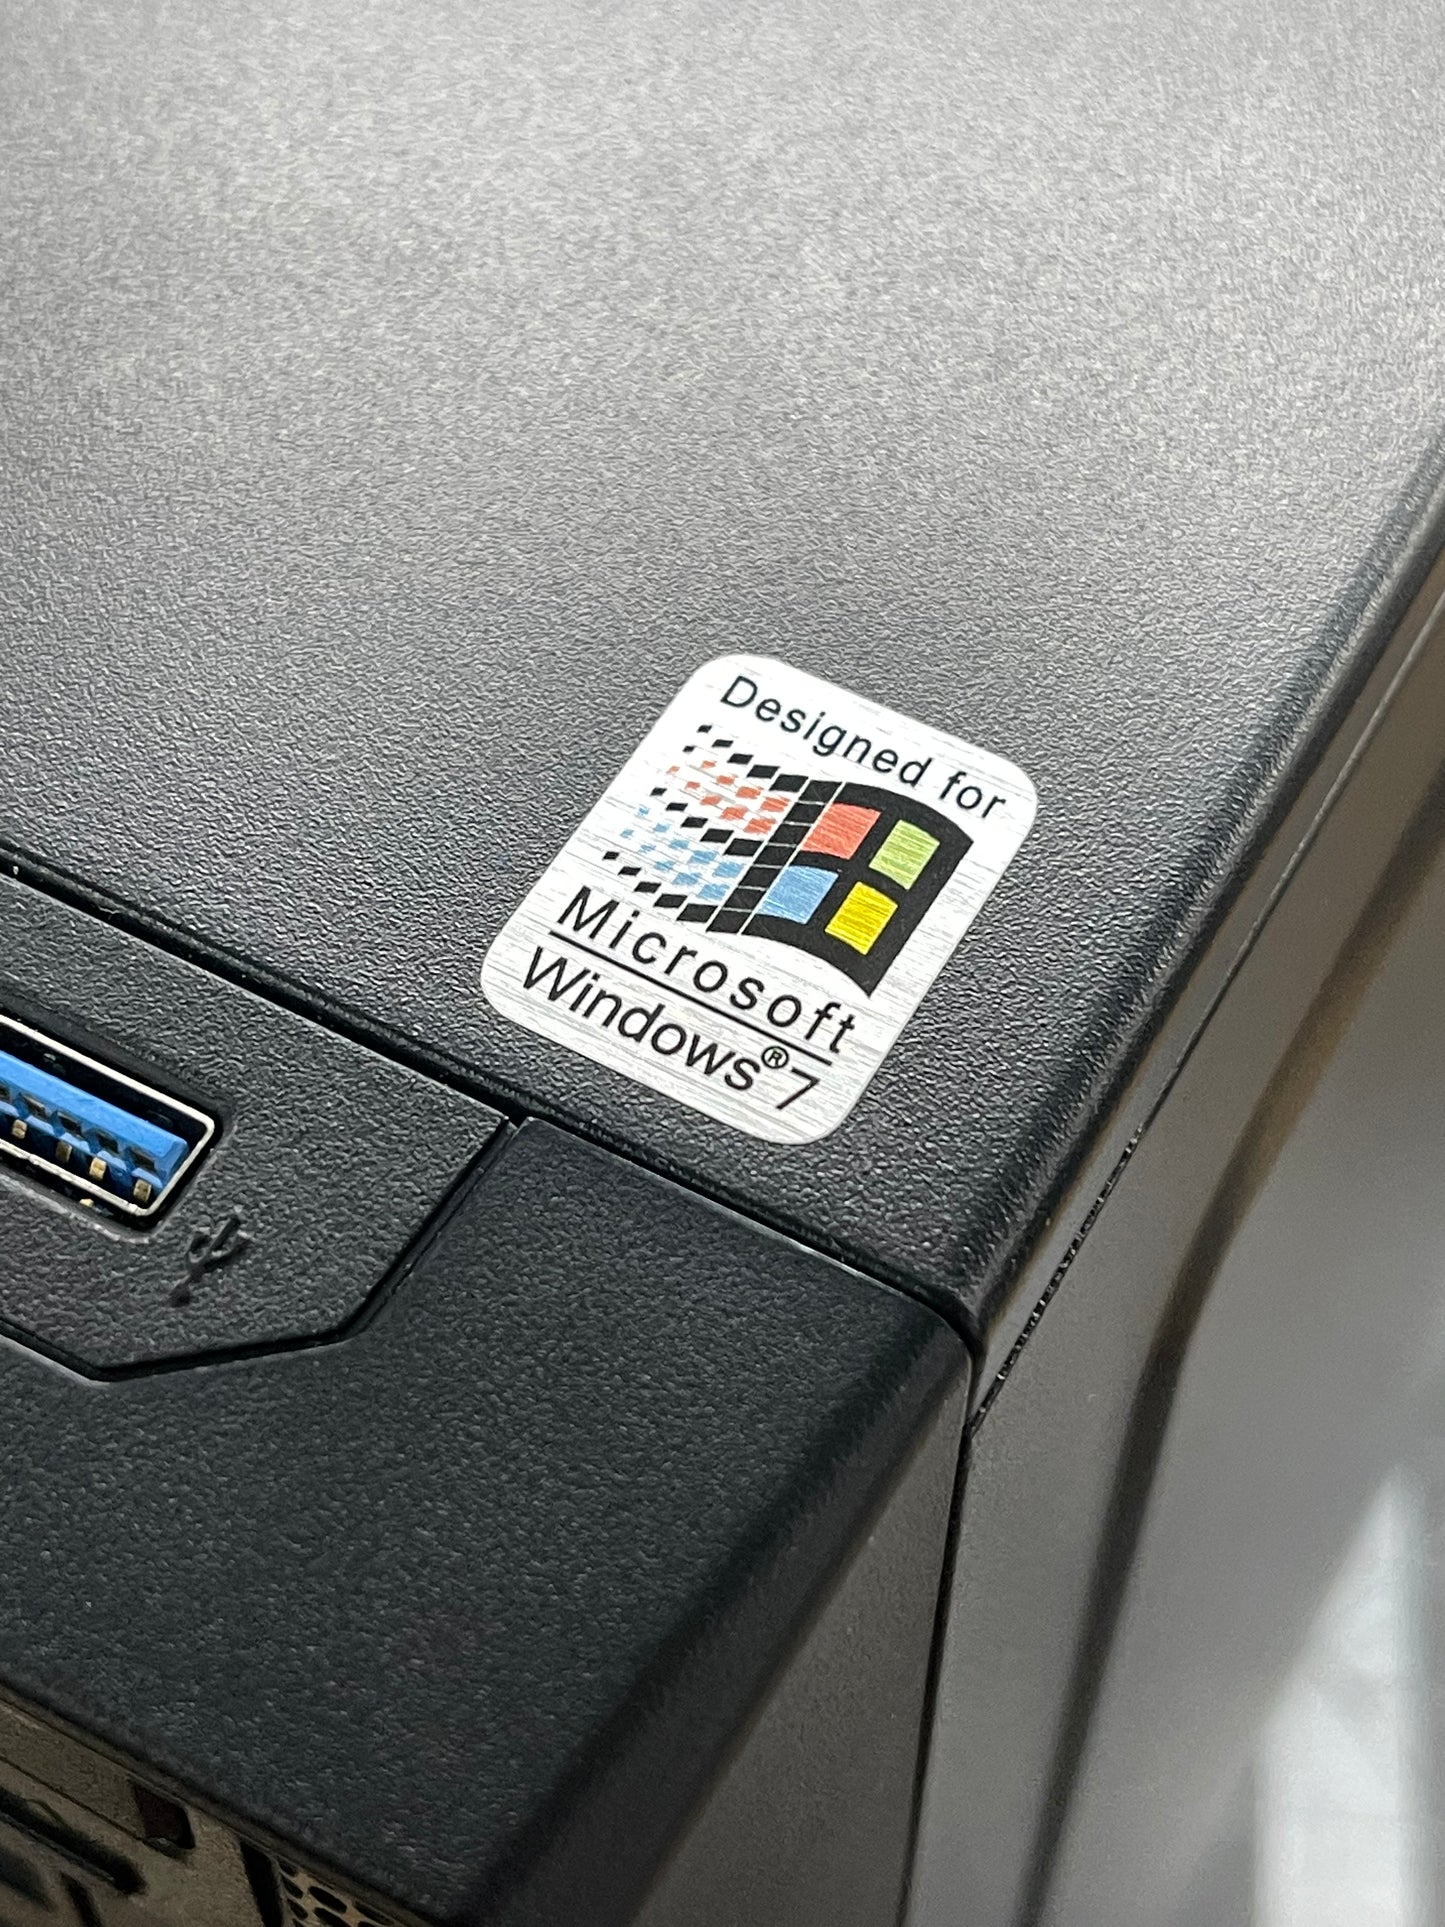 Windows 7 Case Badge Sticker - Metallic